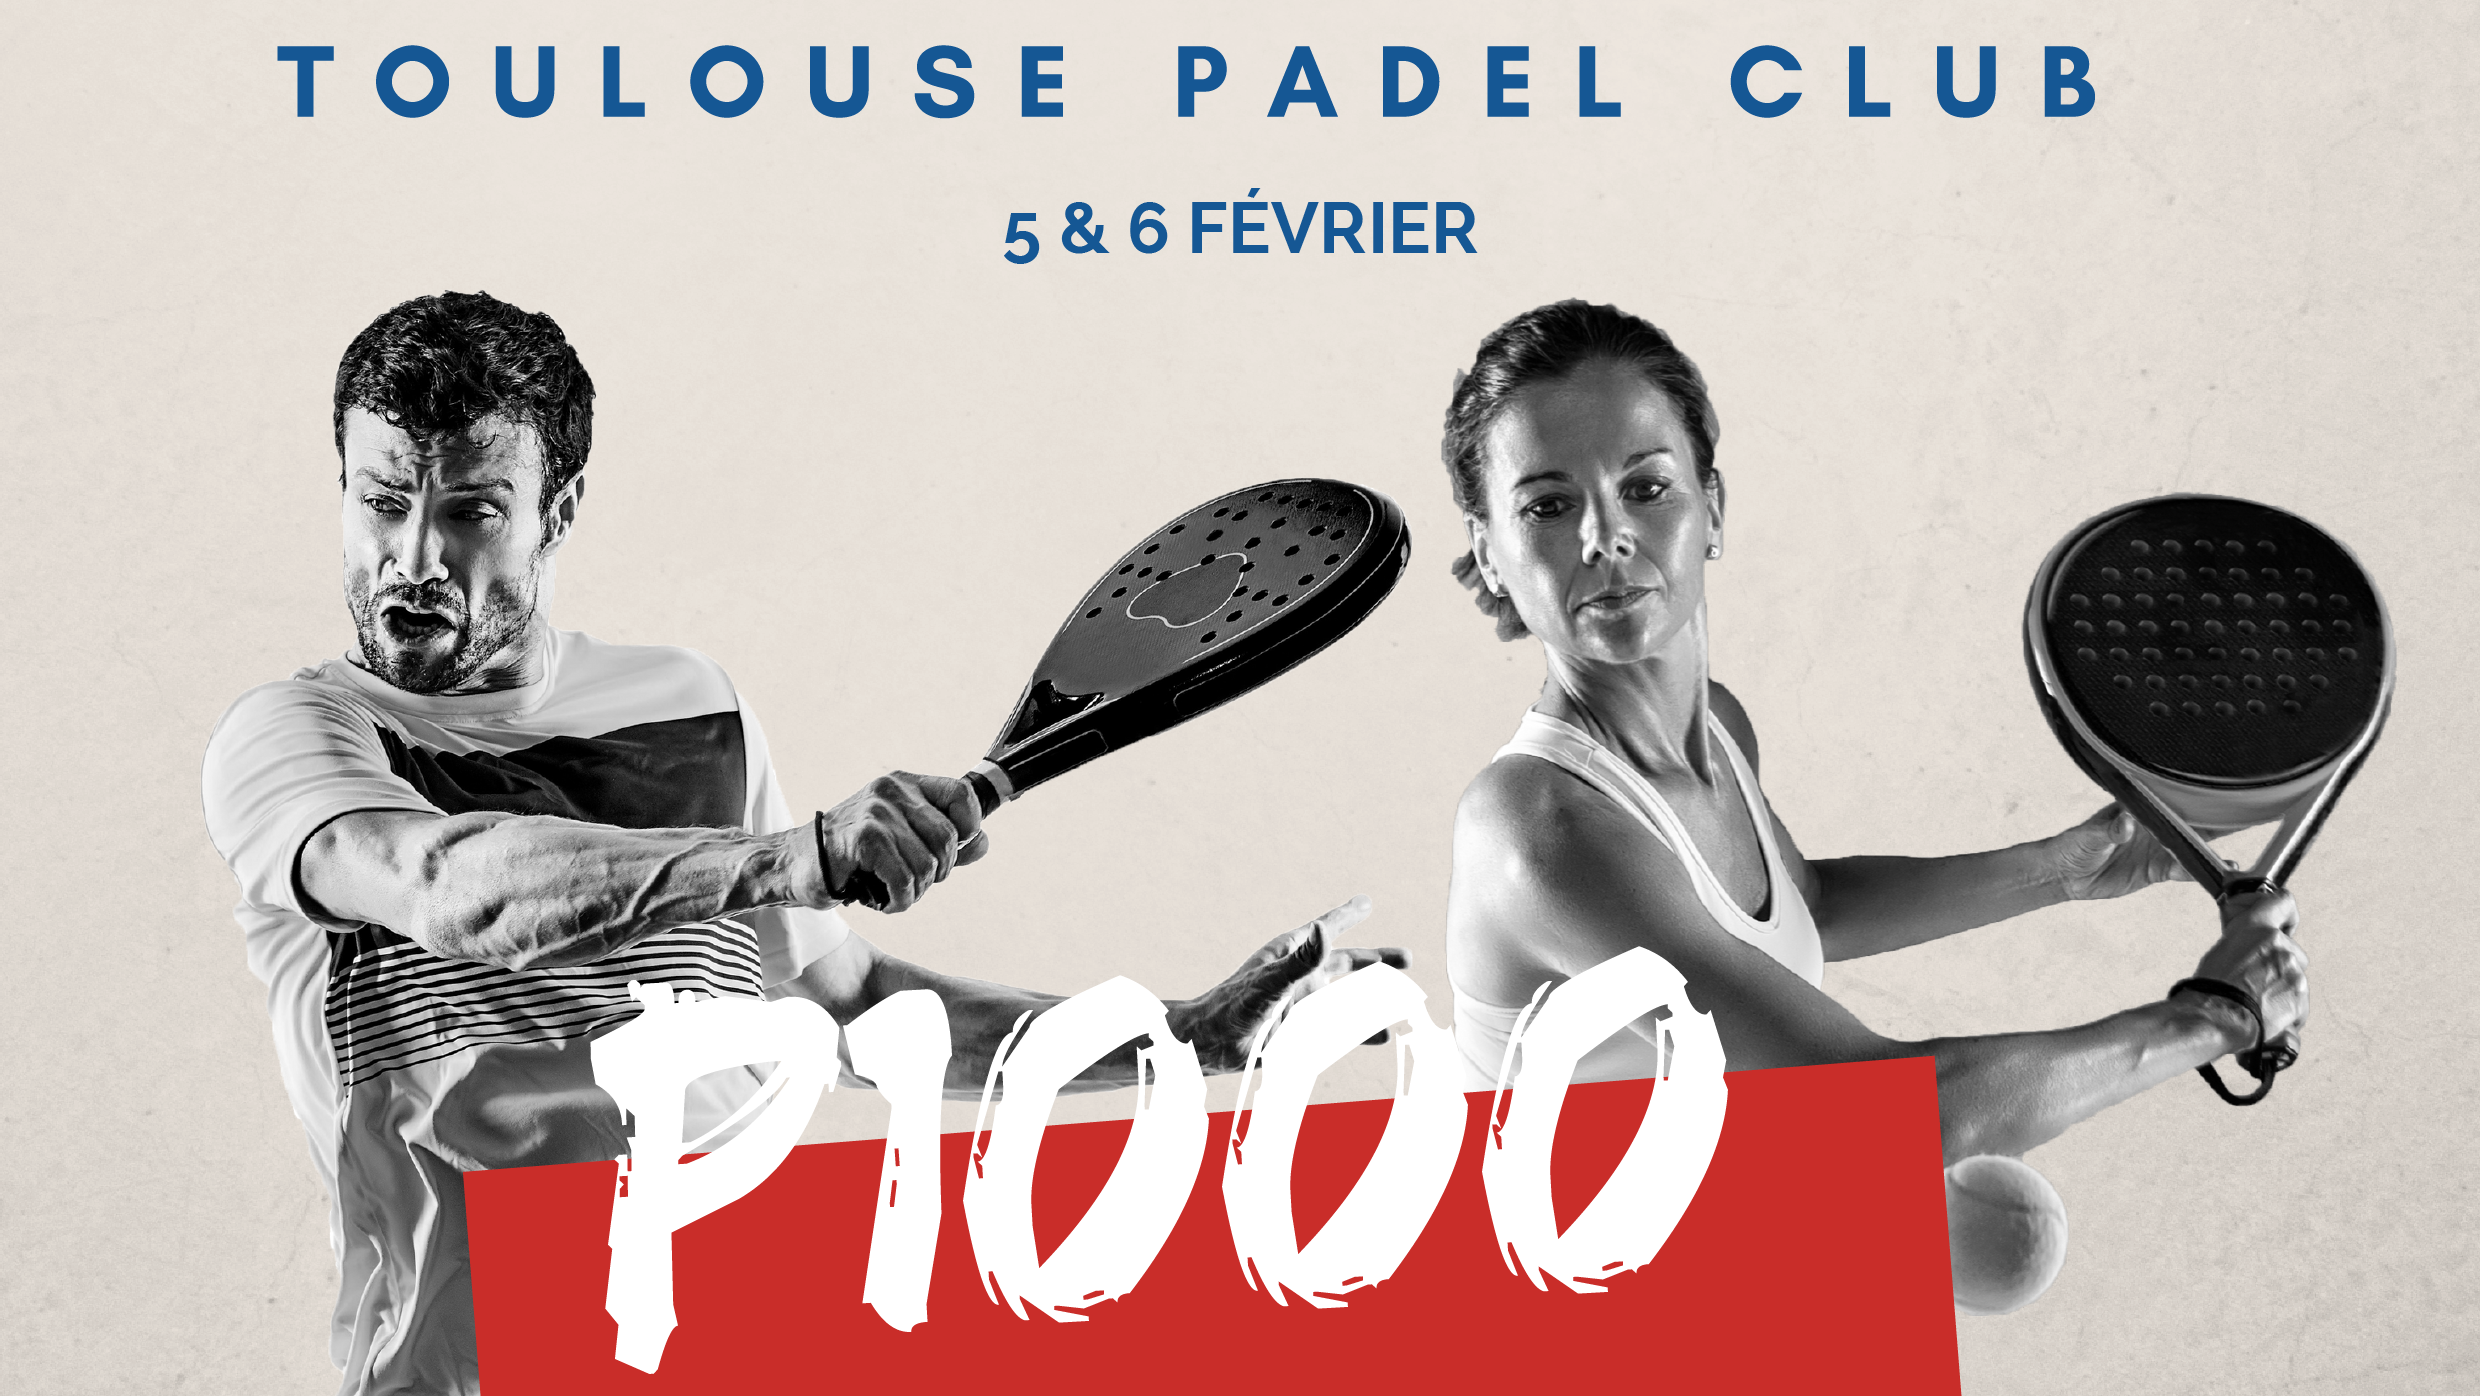 Toulouse Padel Club: P1000 M und F am 5. und 6. Februar 2022